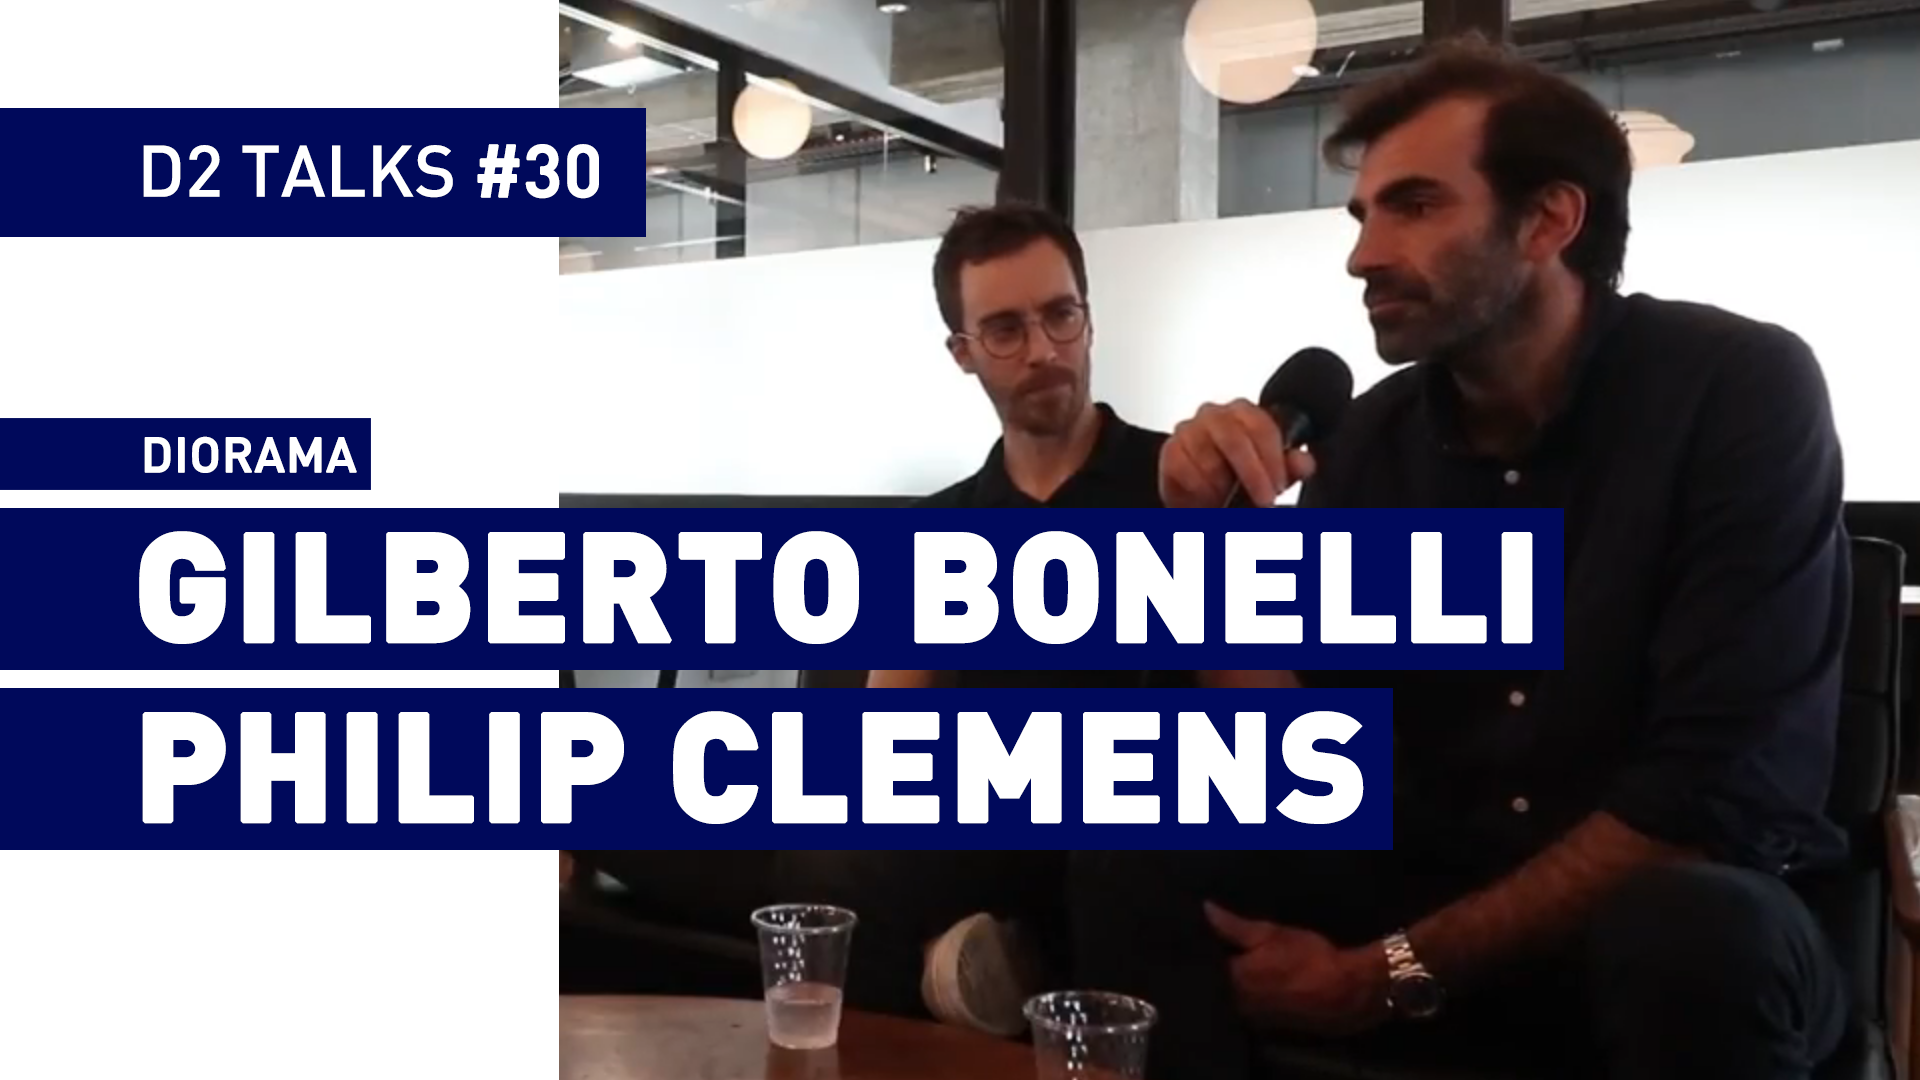 D2 Talks #30: Gilberto Bonelli and Philip Clemens of Diorama